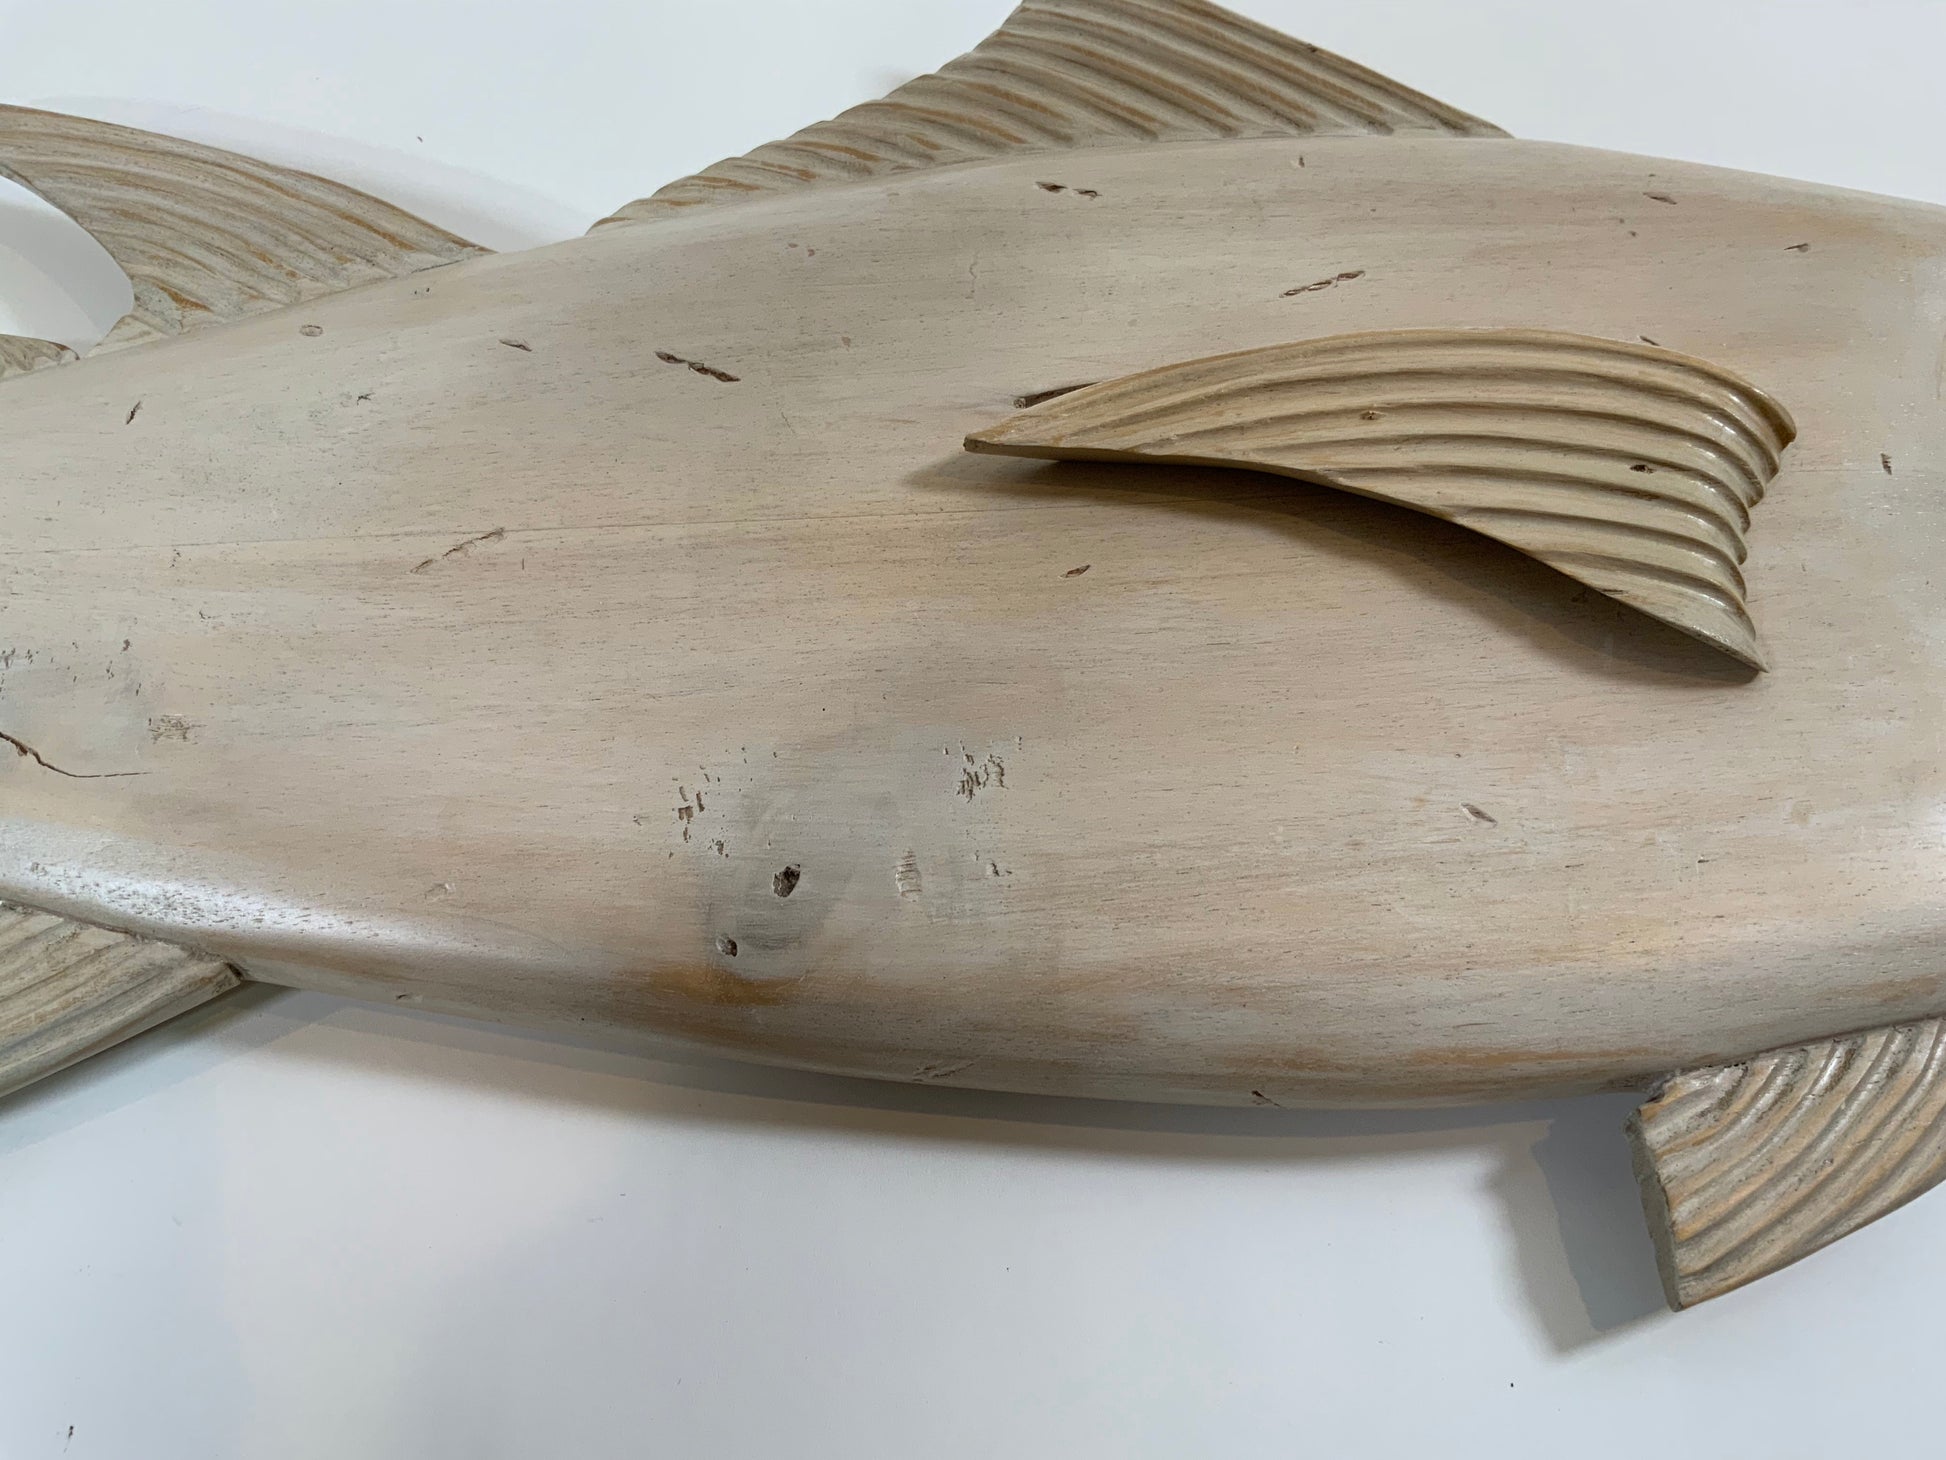 Carved Tuna Fish - Lannan Gallery